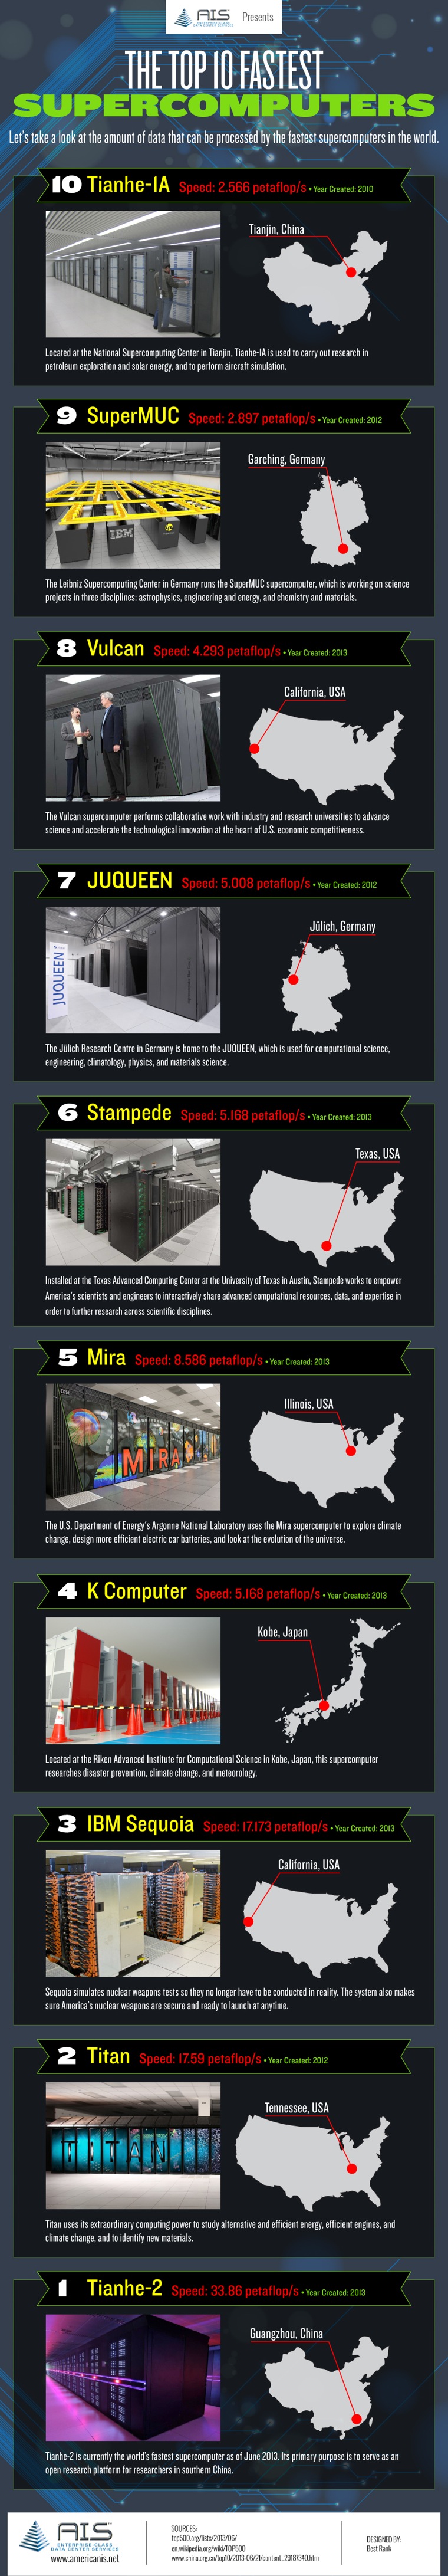 World's 10 Fastest Supercomputers